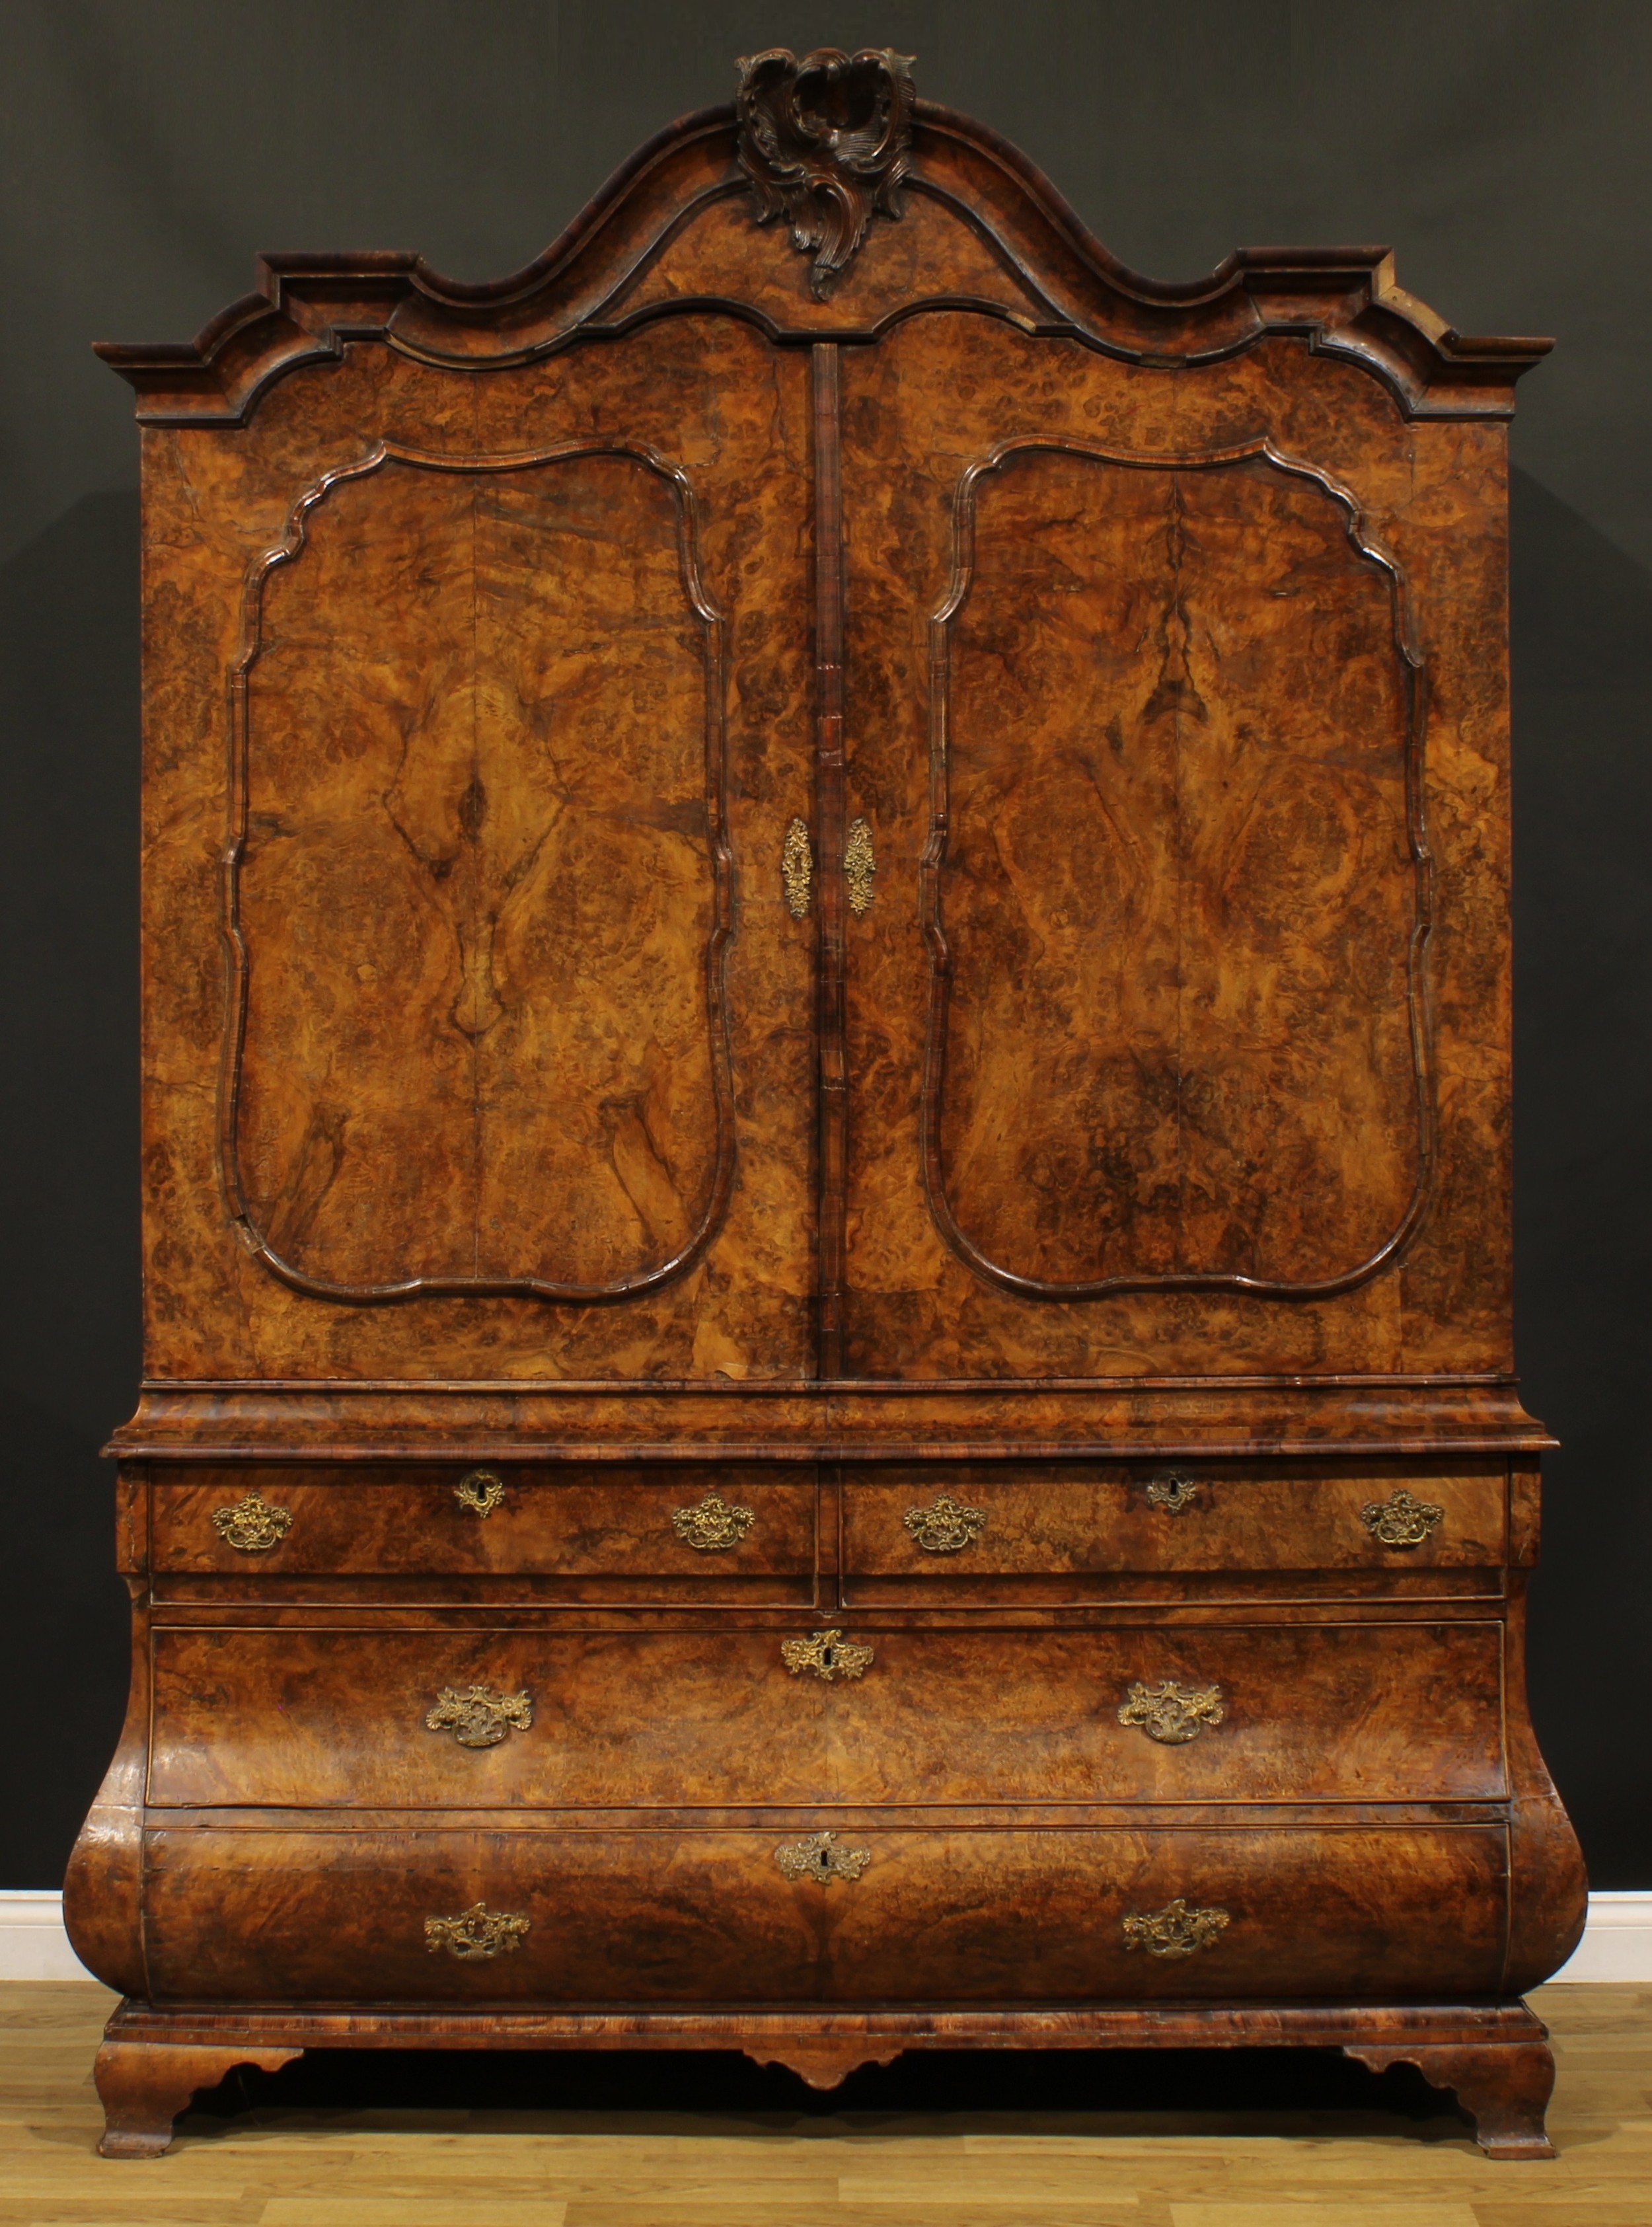 A large late 18th century Dutch burr walnut armoire or press cupboard, shaped chapeau de gendarme